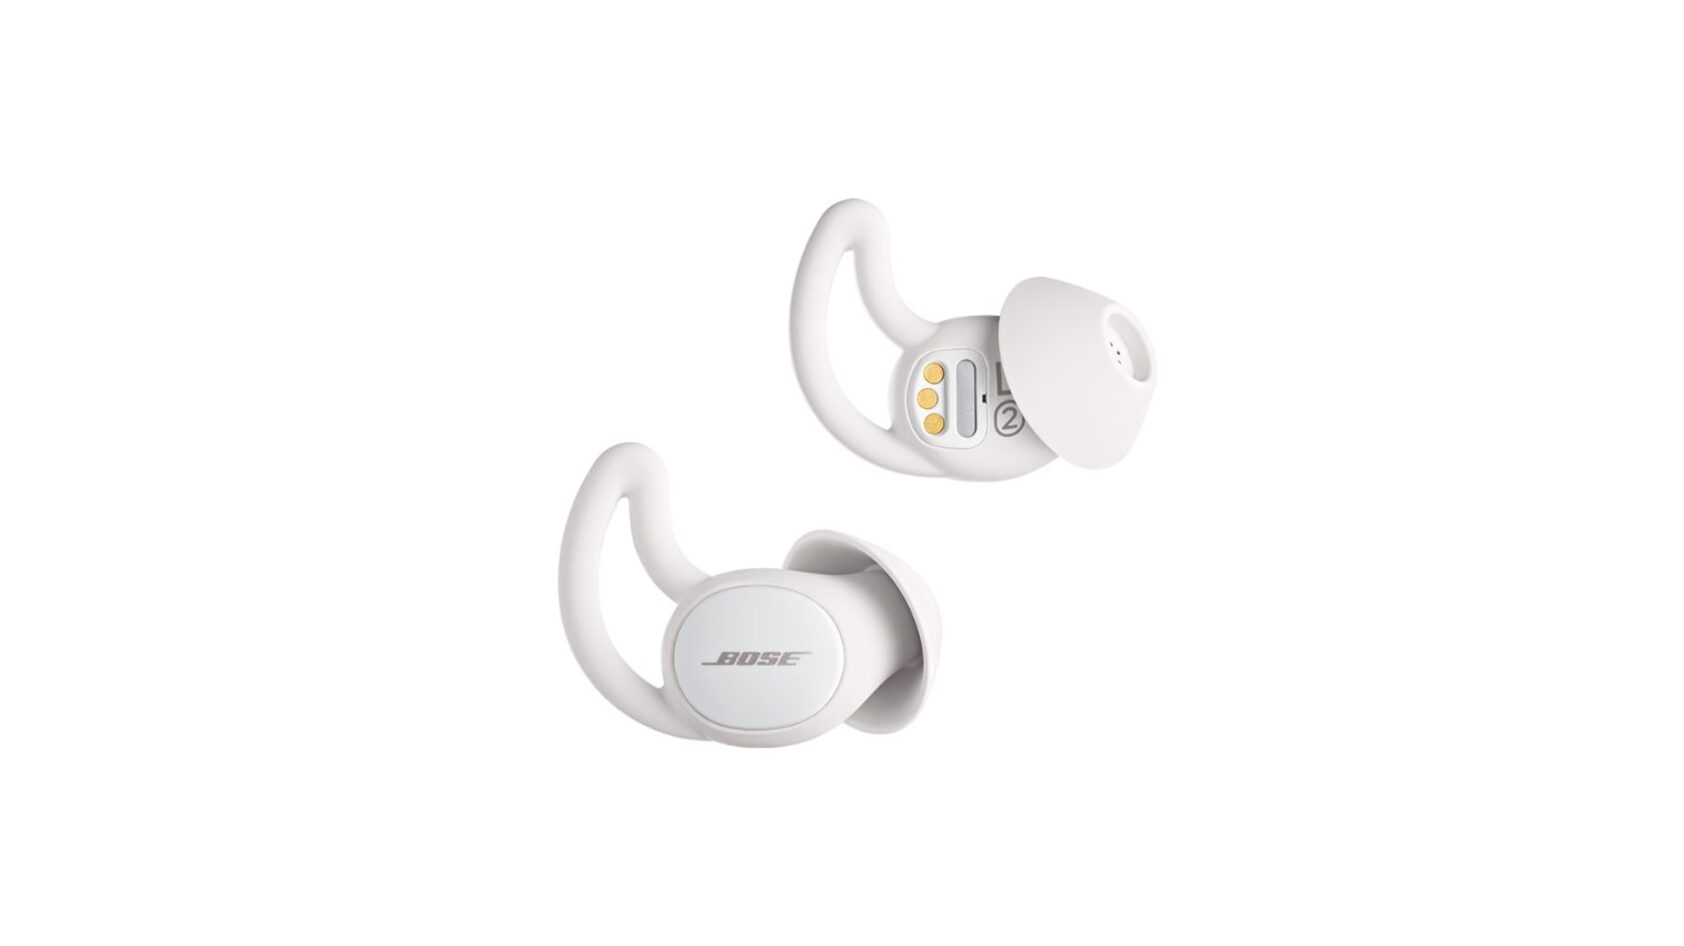 The Bose Sleepbuds II earbuds.